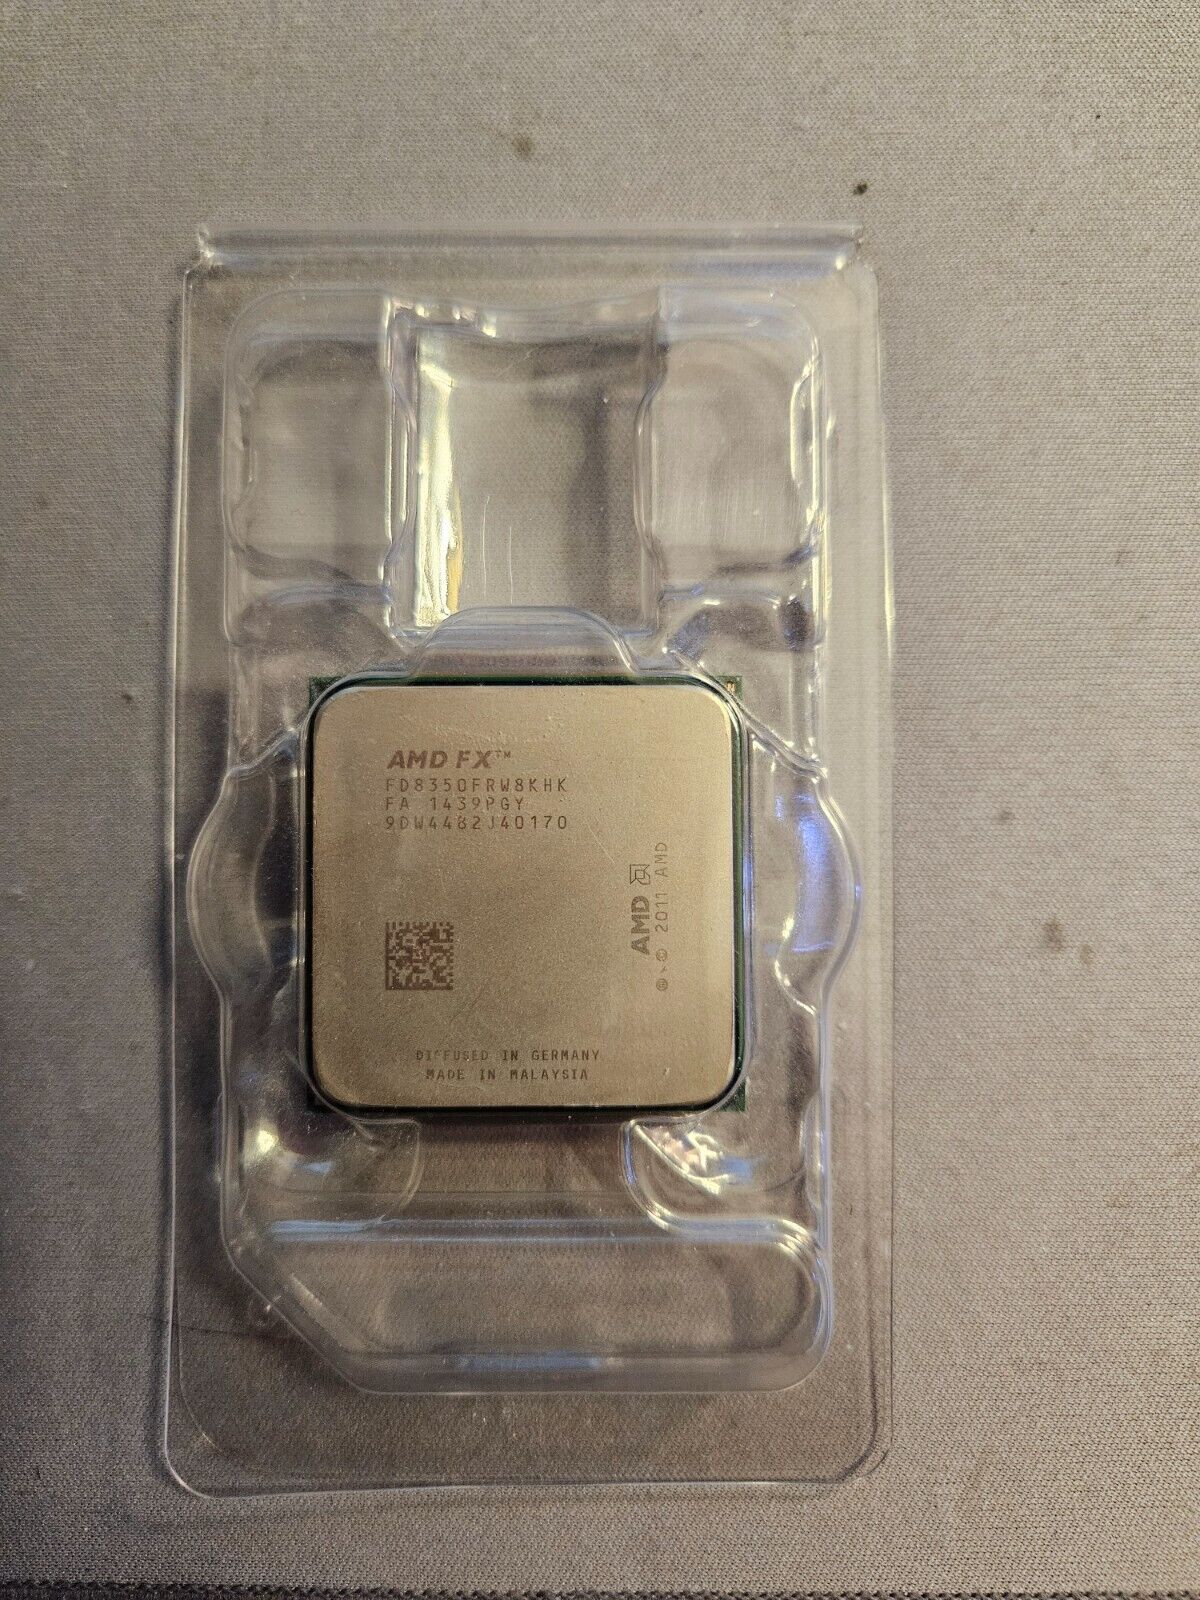 AMD FX8350 FX 8350 Black Edition FD8350FRW8KHK 4GHz AM3+ 8-Core Processor CPU US